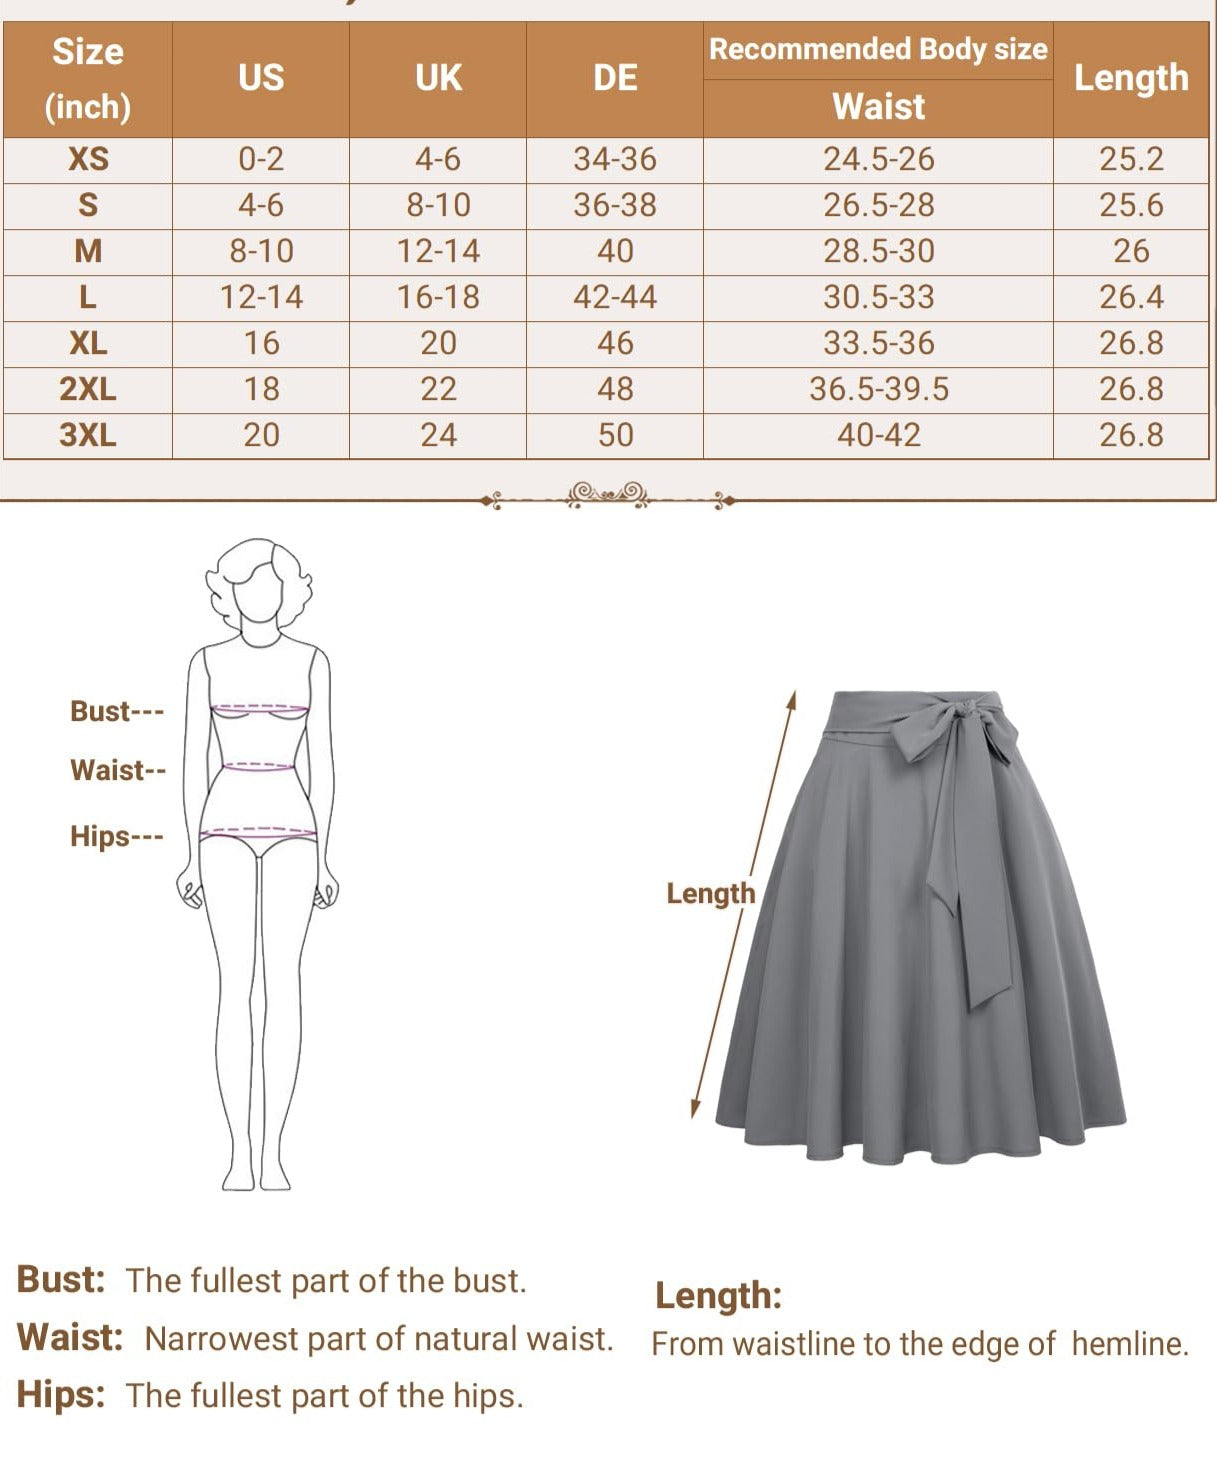 Women's High Waist A-Line Midi Skirt Pleated Pockets Skirts with Belt Black-1 Size XL